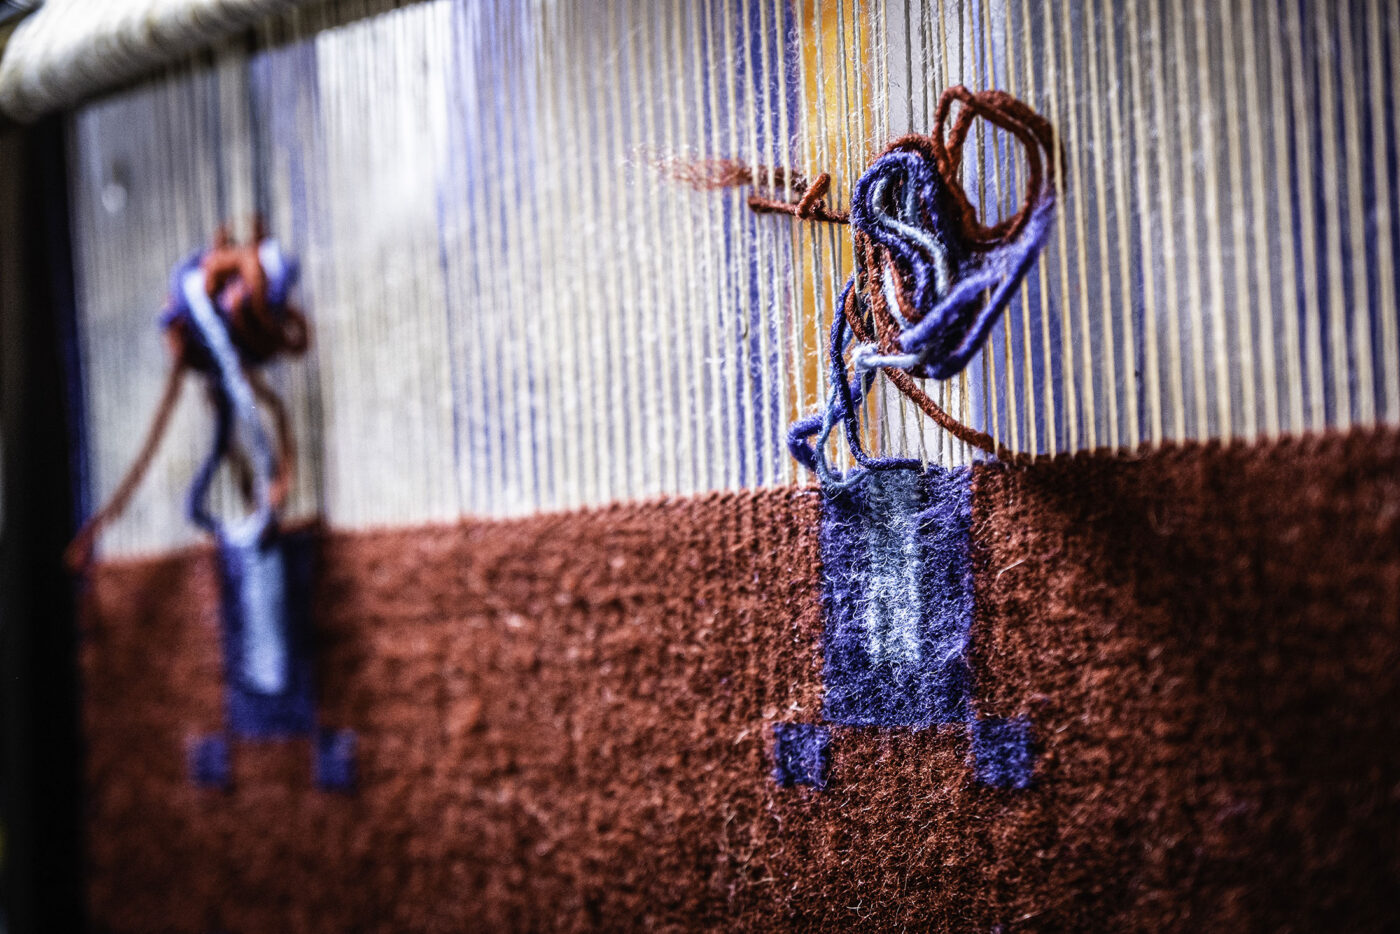 Behind The Loom - by Navajo photographer, Fleurette Estes